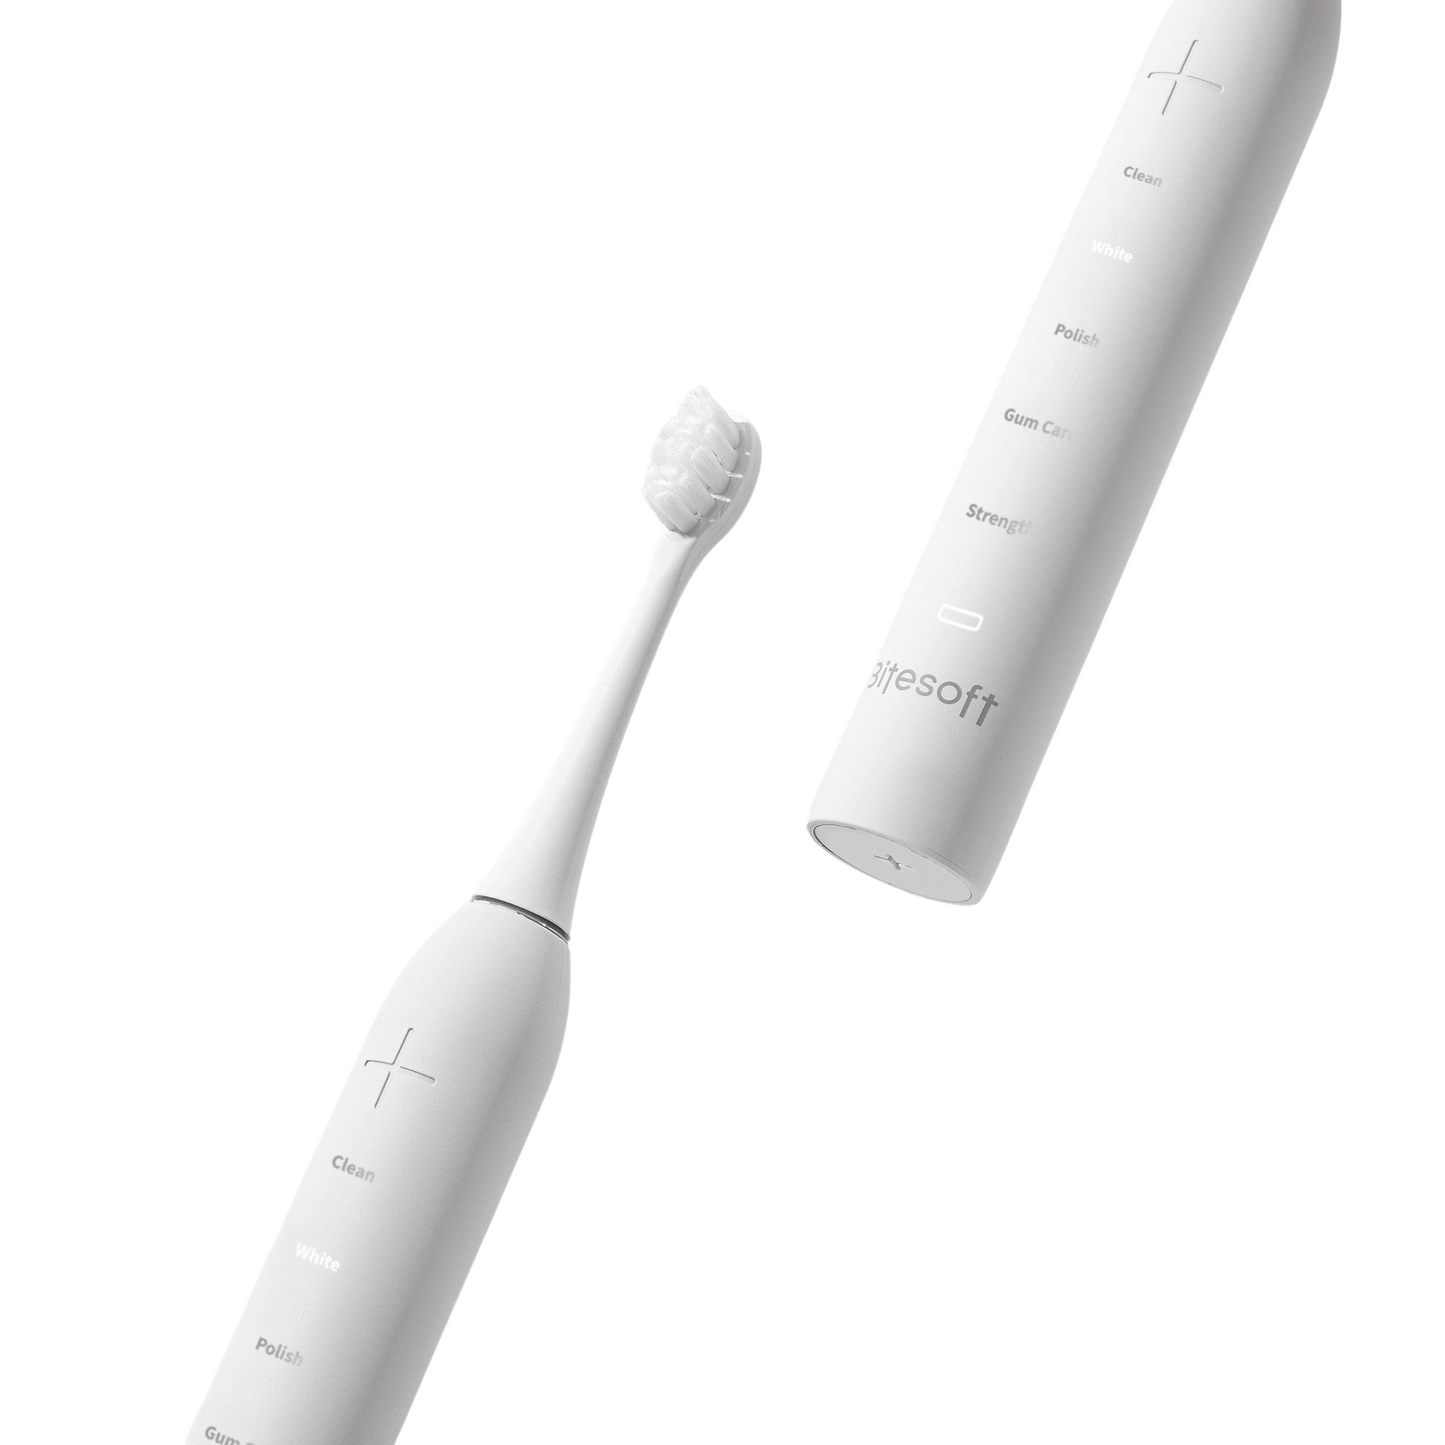 Ultra Sonic Toothbrush